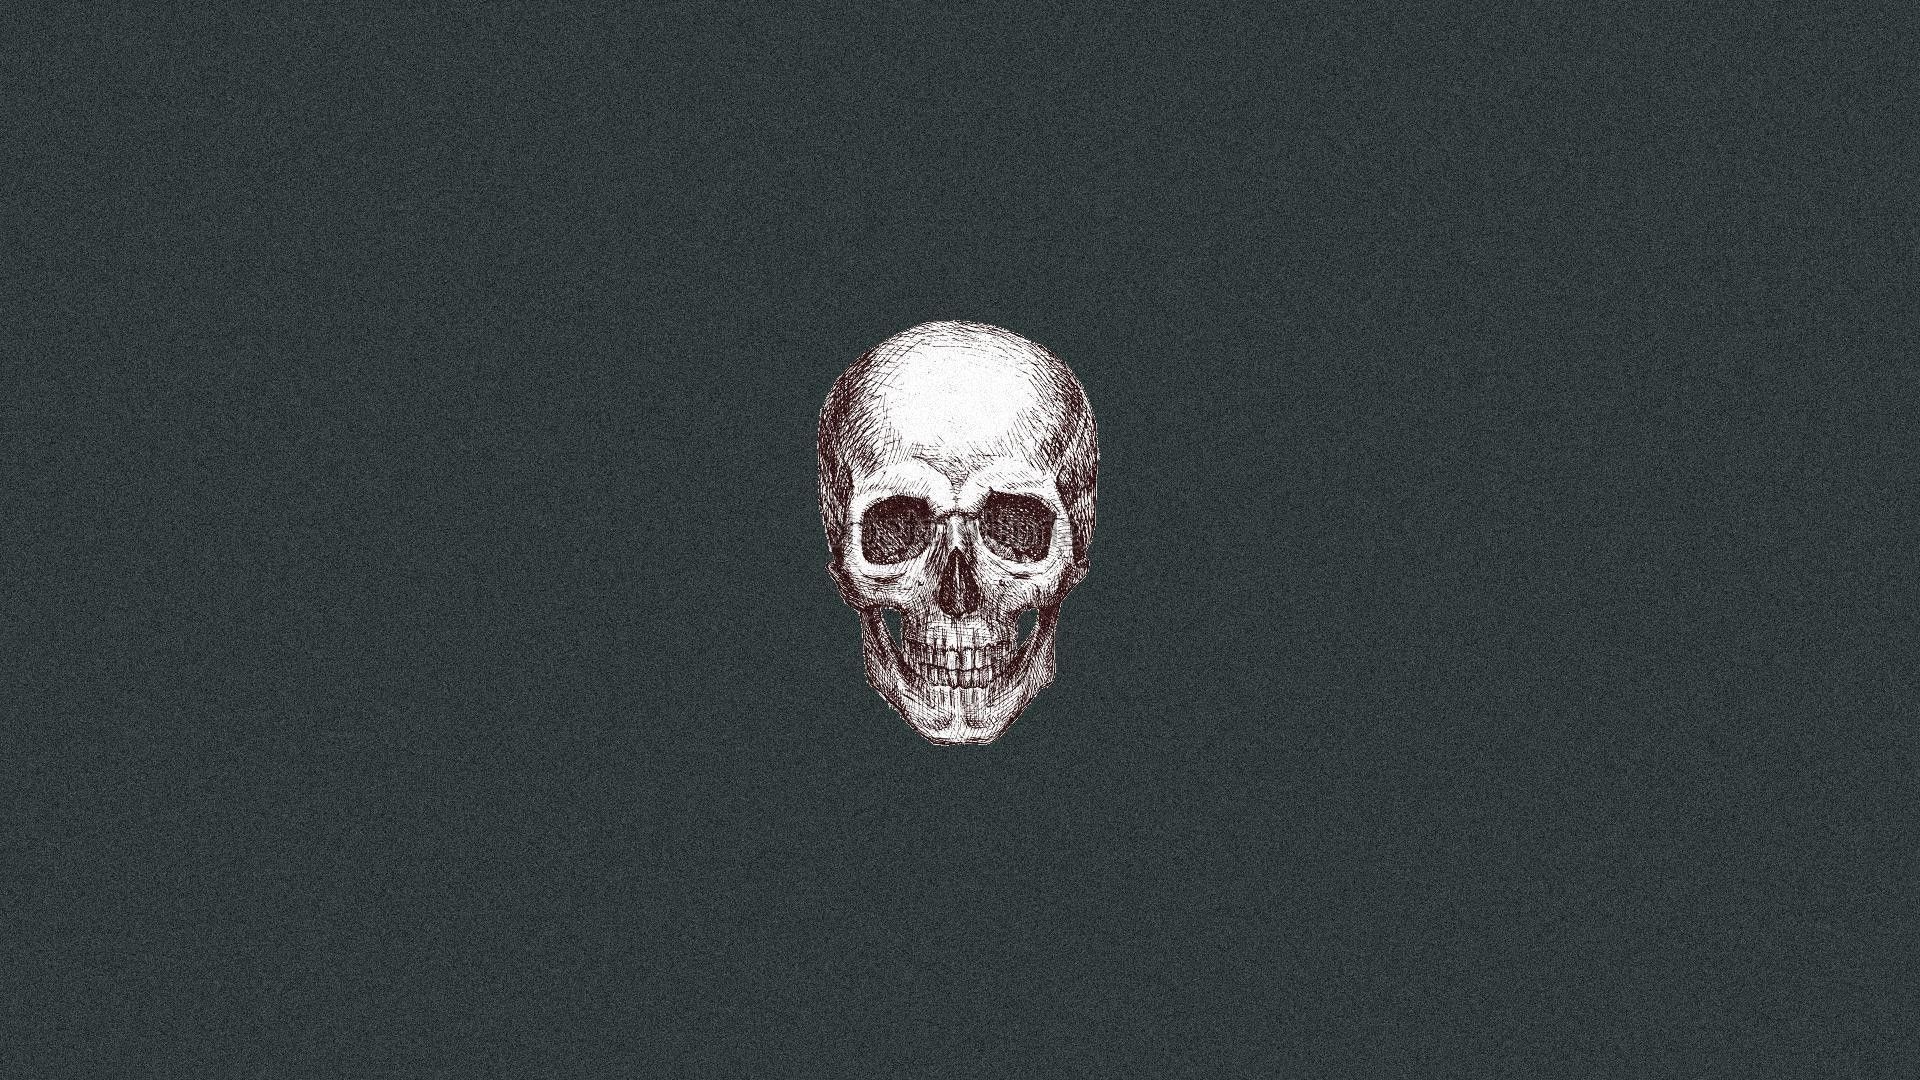 Skull Aesthetic Wallpaper Desktop .wallpapertip.com